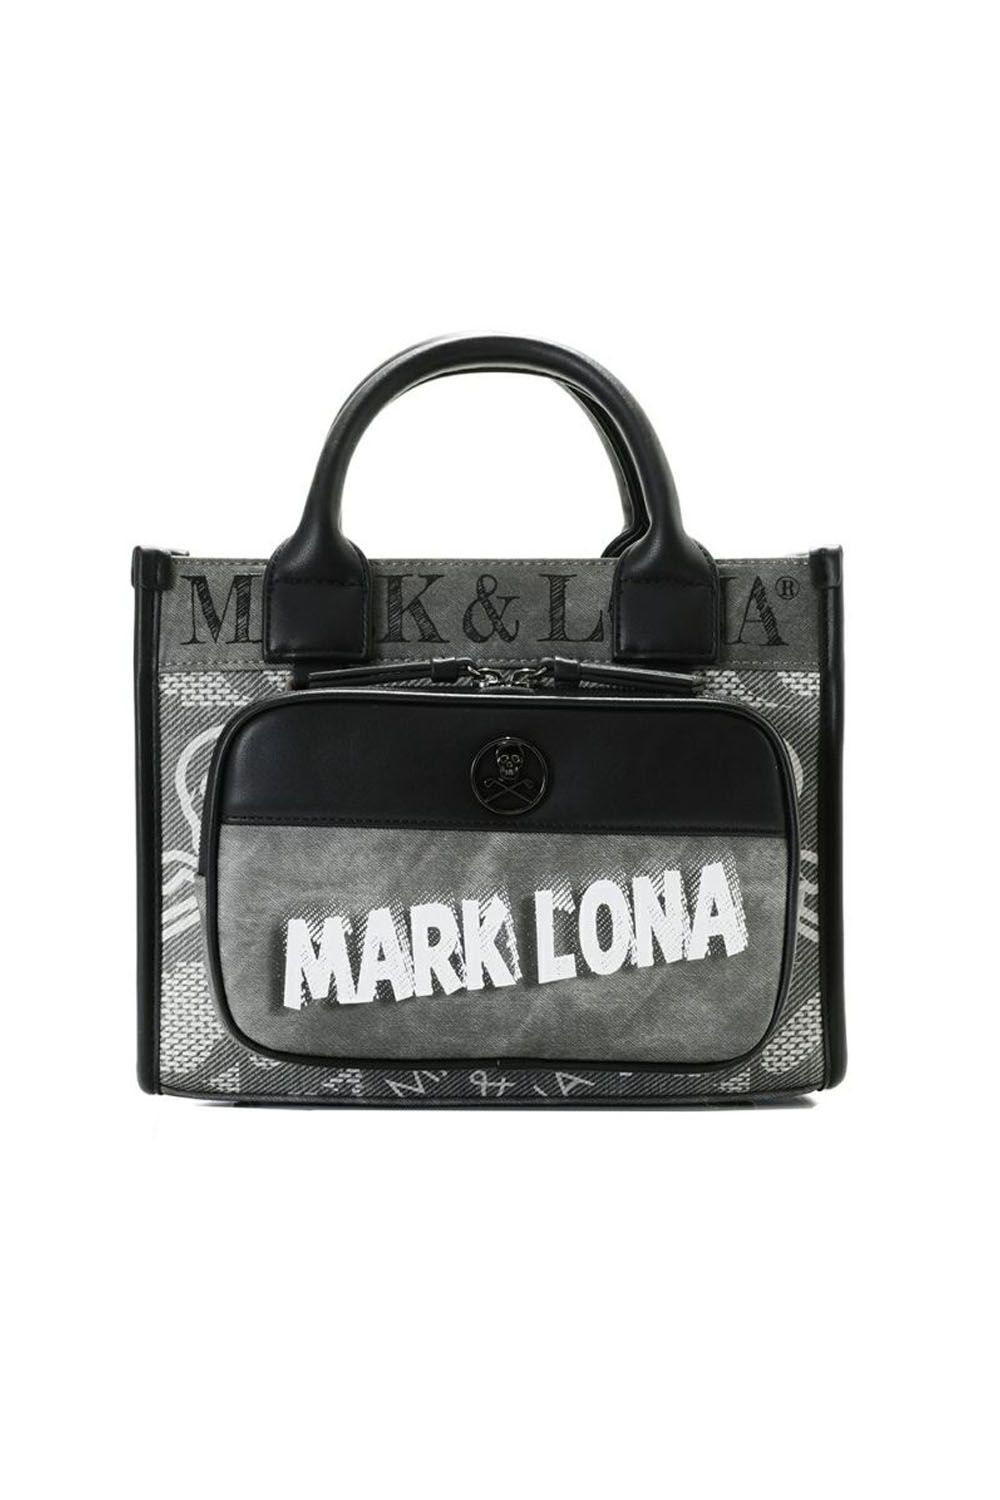 MARK&LONA - マークアンドロナ | 正規通販《GOSSIP GOLF》